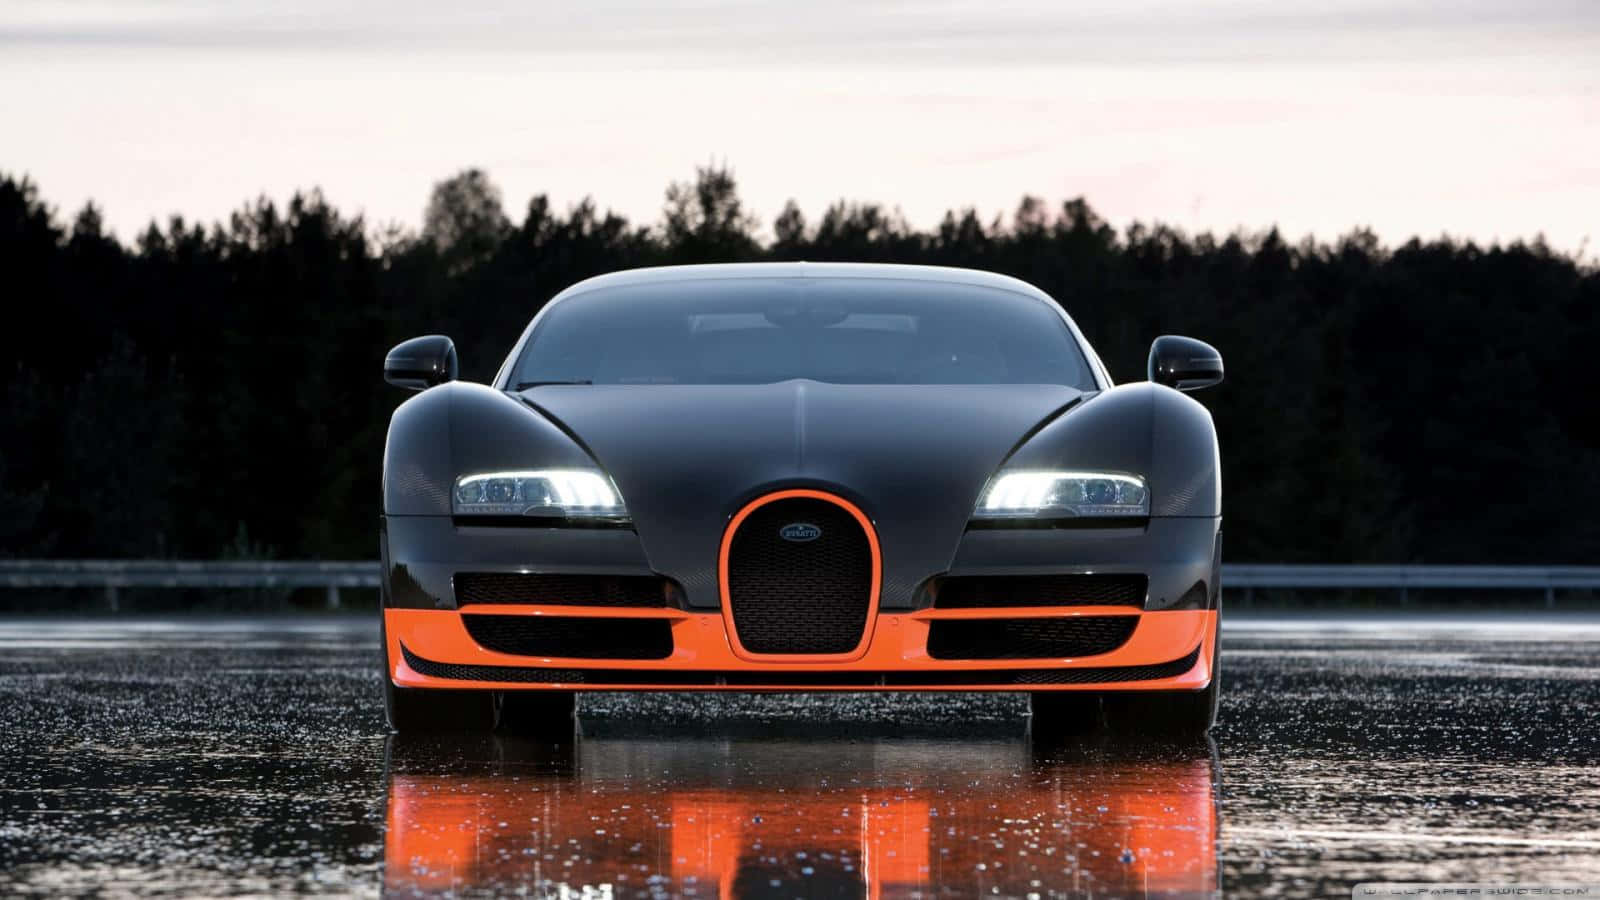 The Bold and Powerful Bugatti Car Wallpaper